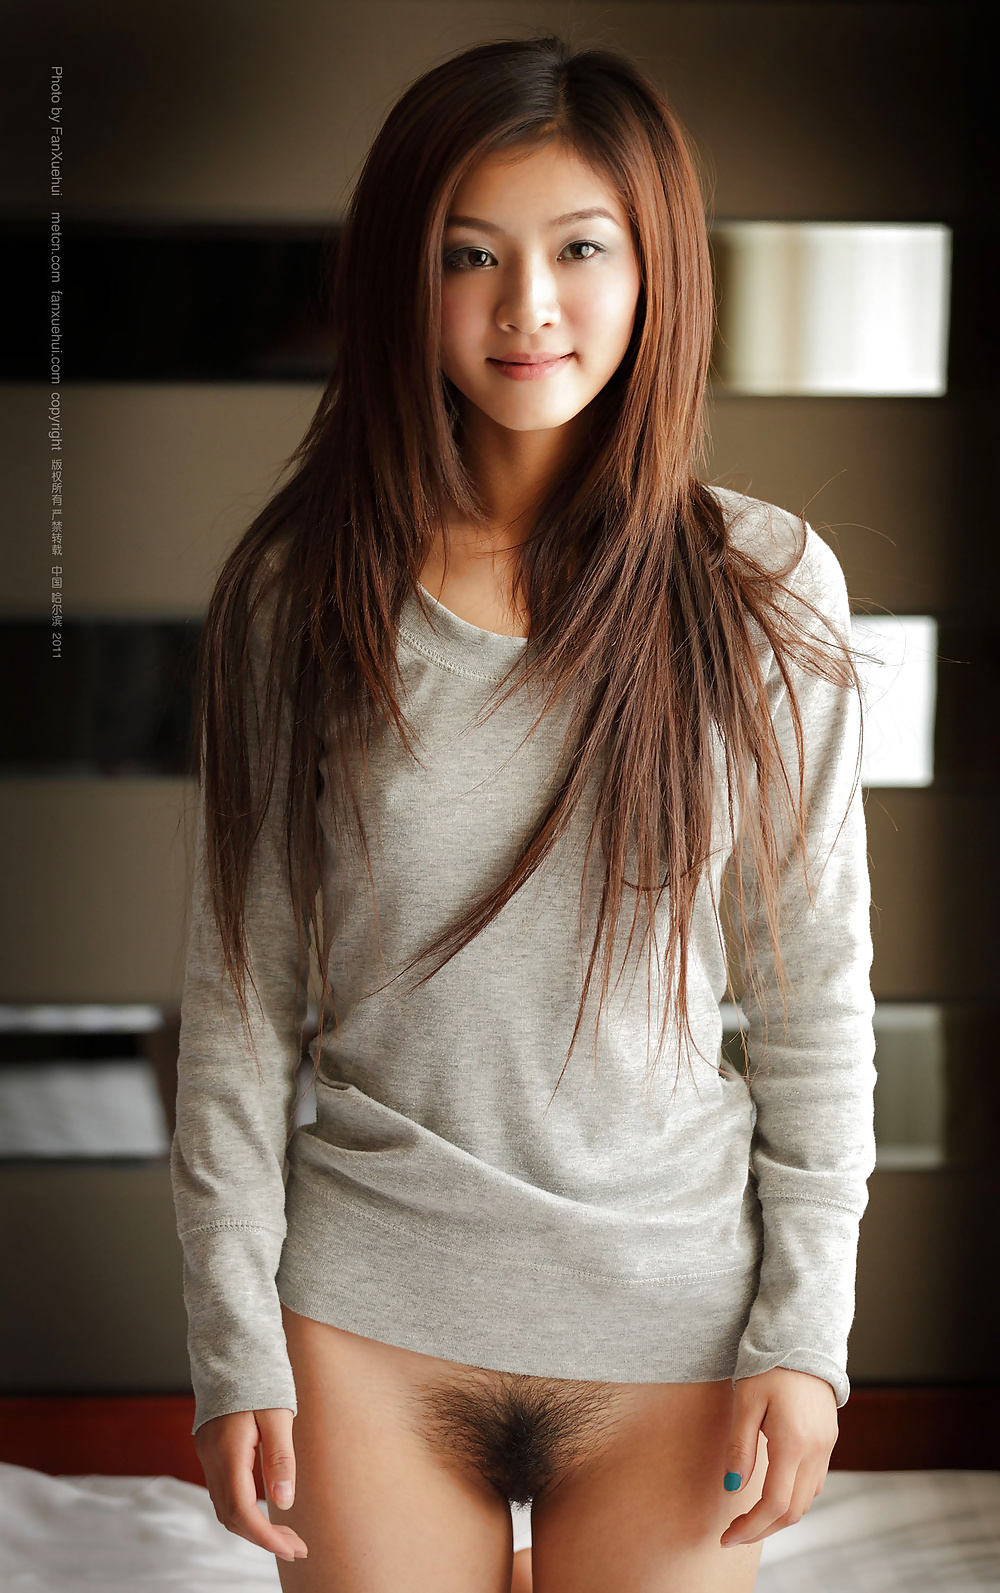 The Beauty Of Asian Women #23011553